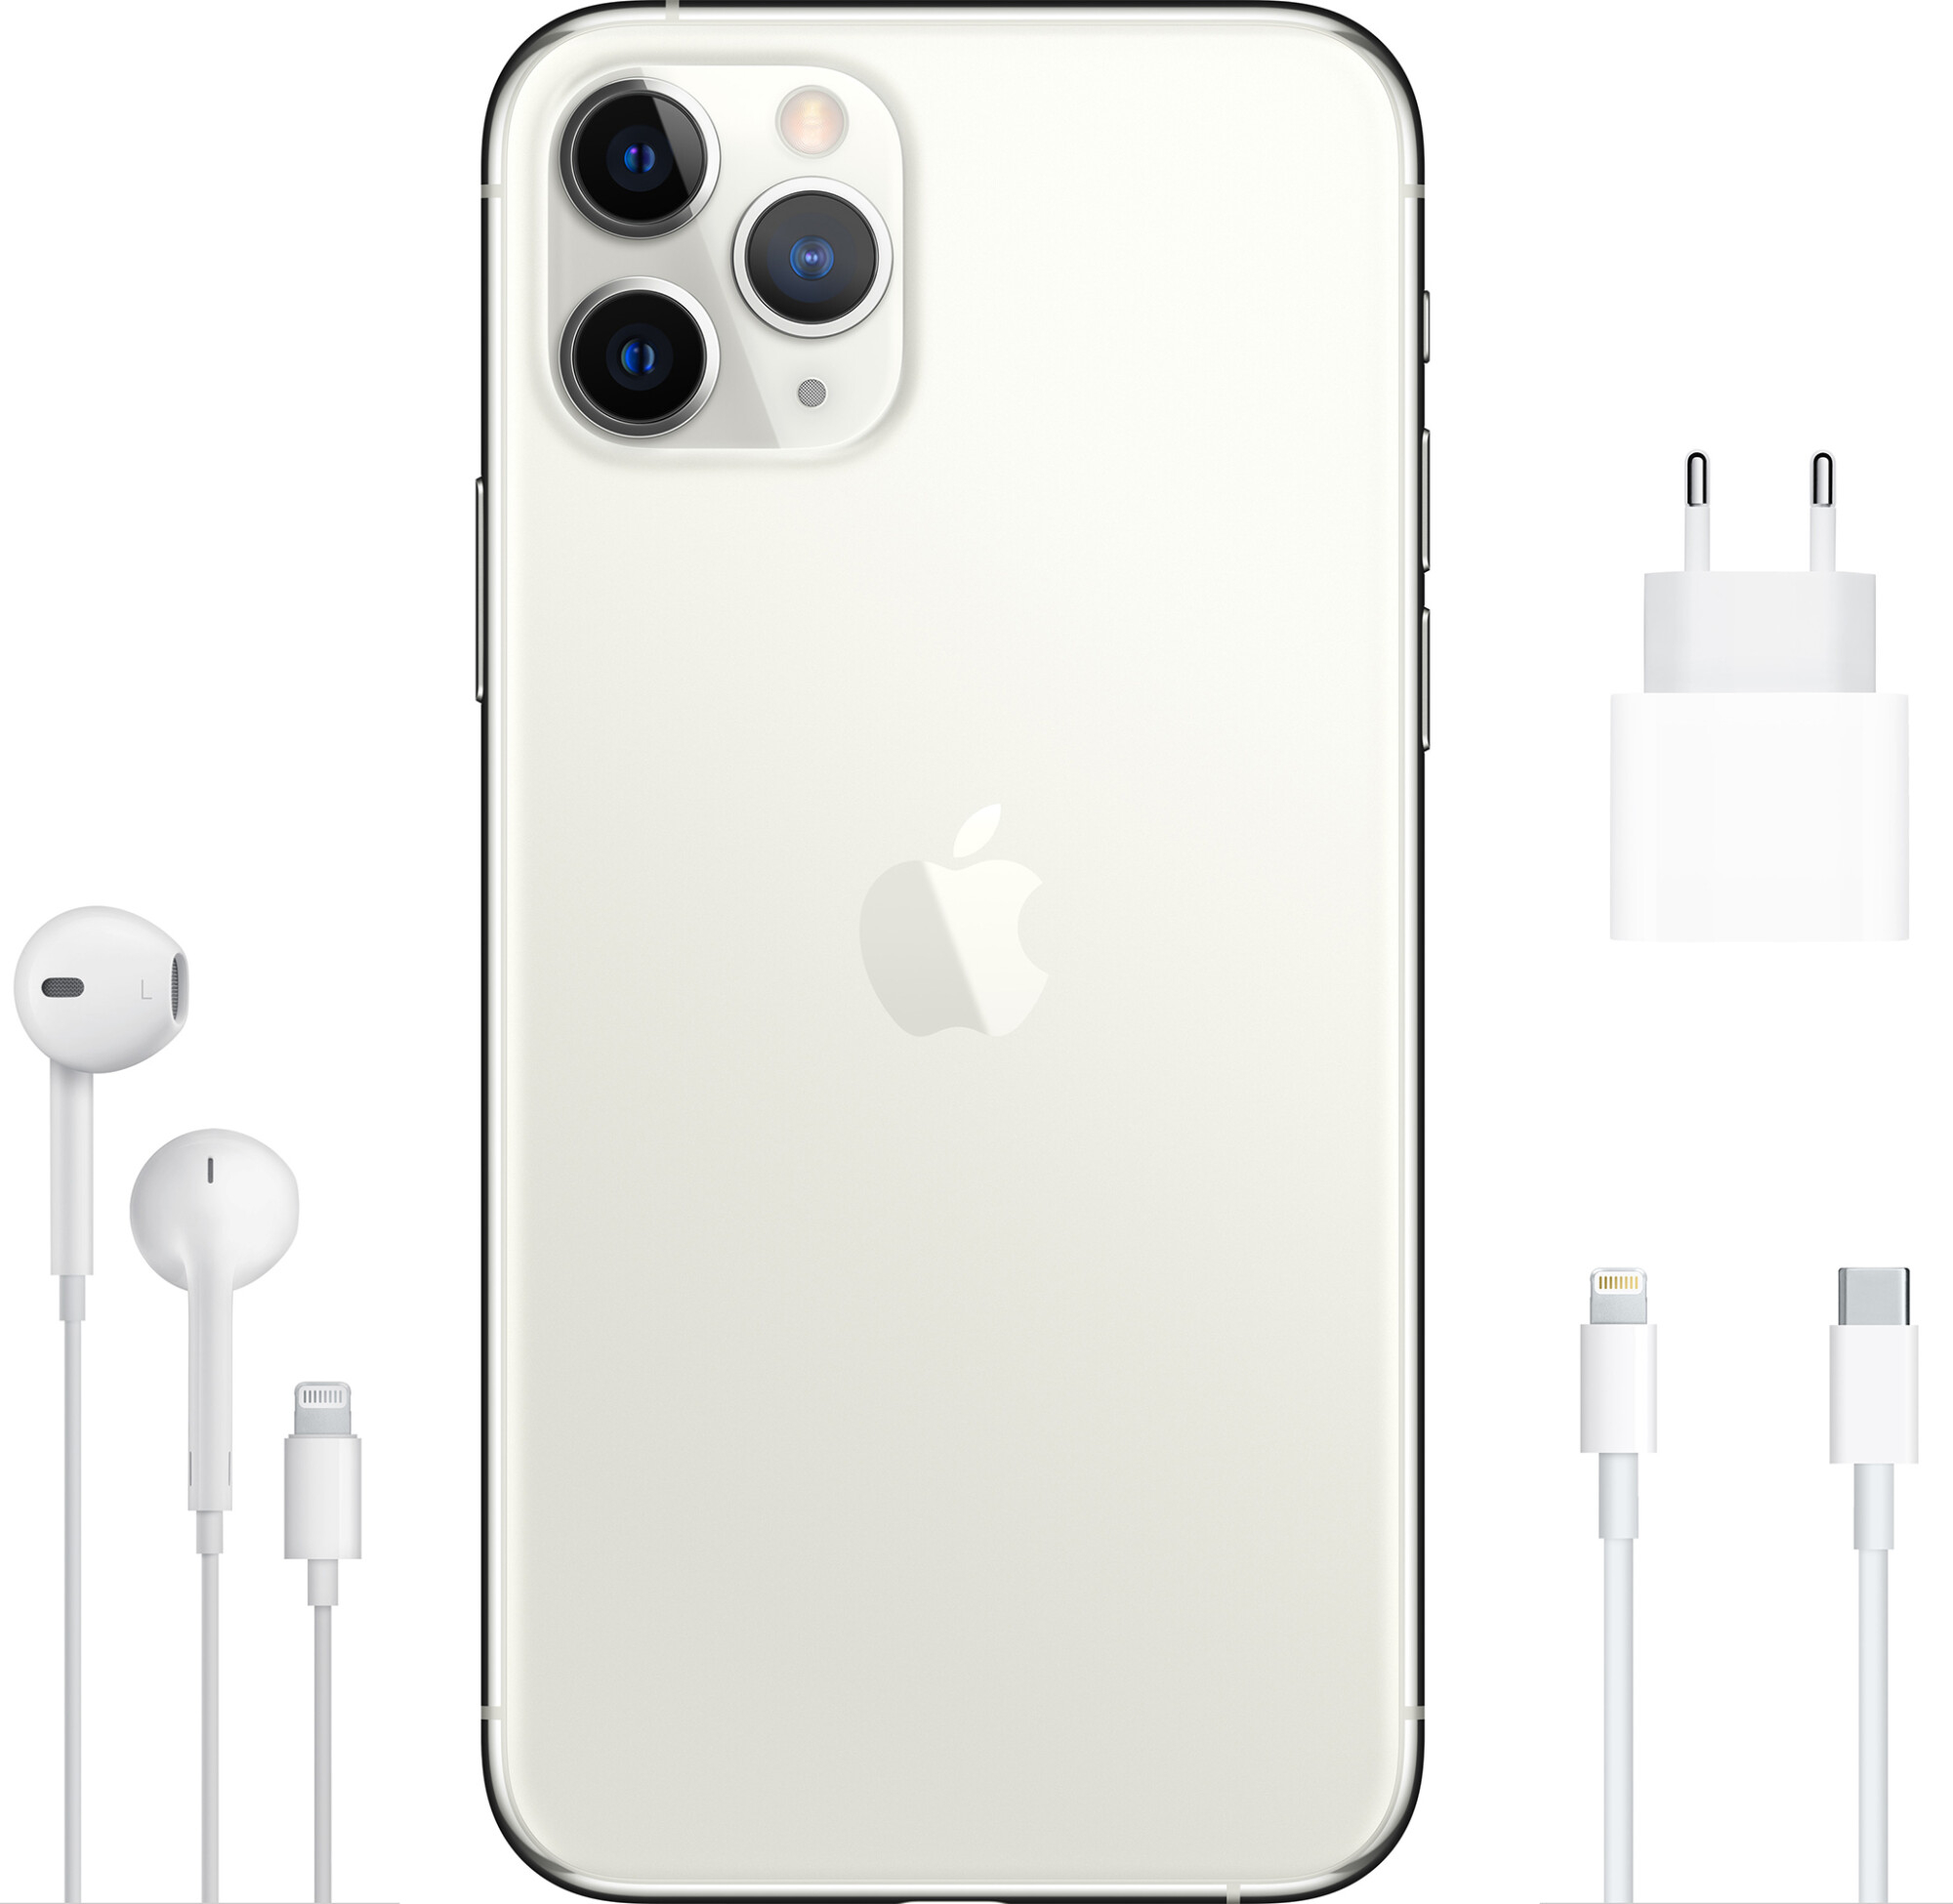  Apple iPhone 11 Pro 256GB Silver (MWCN2)